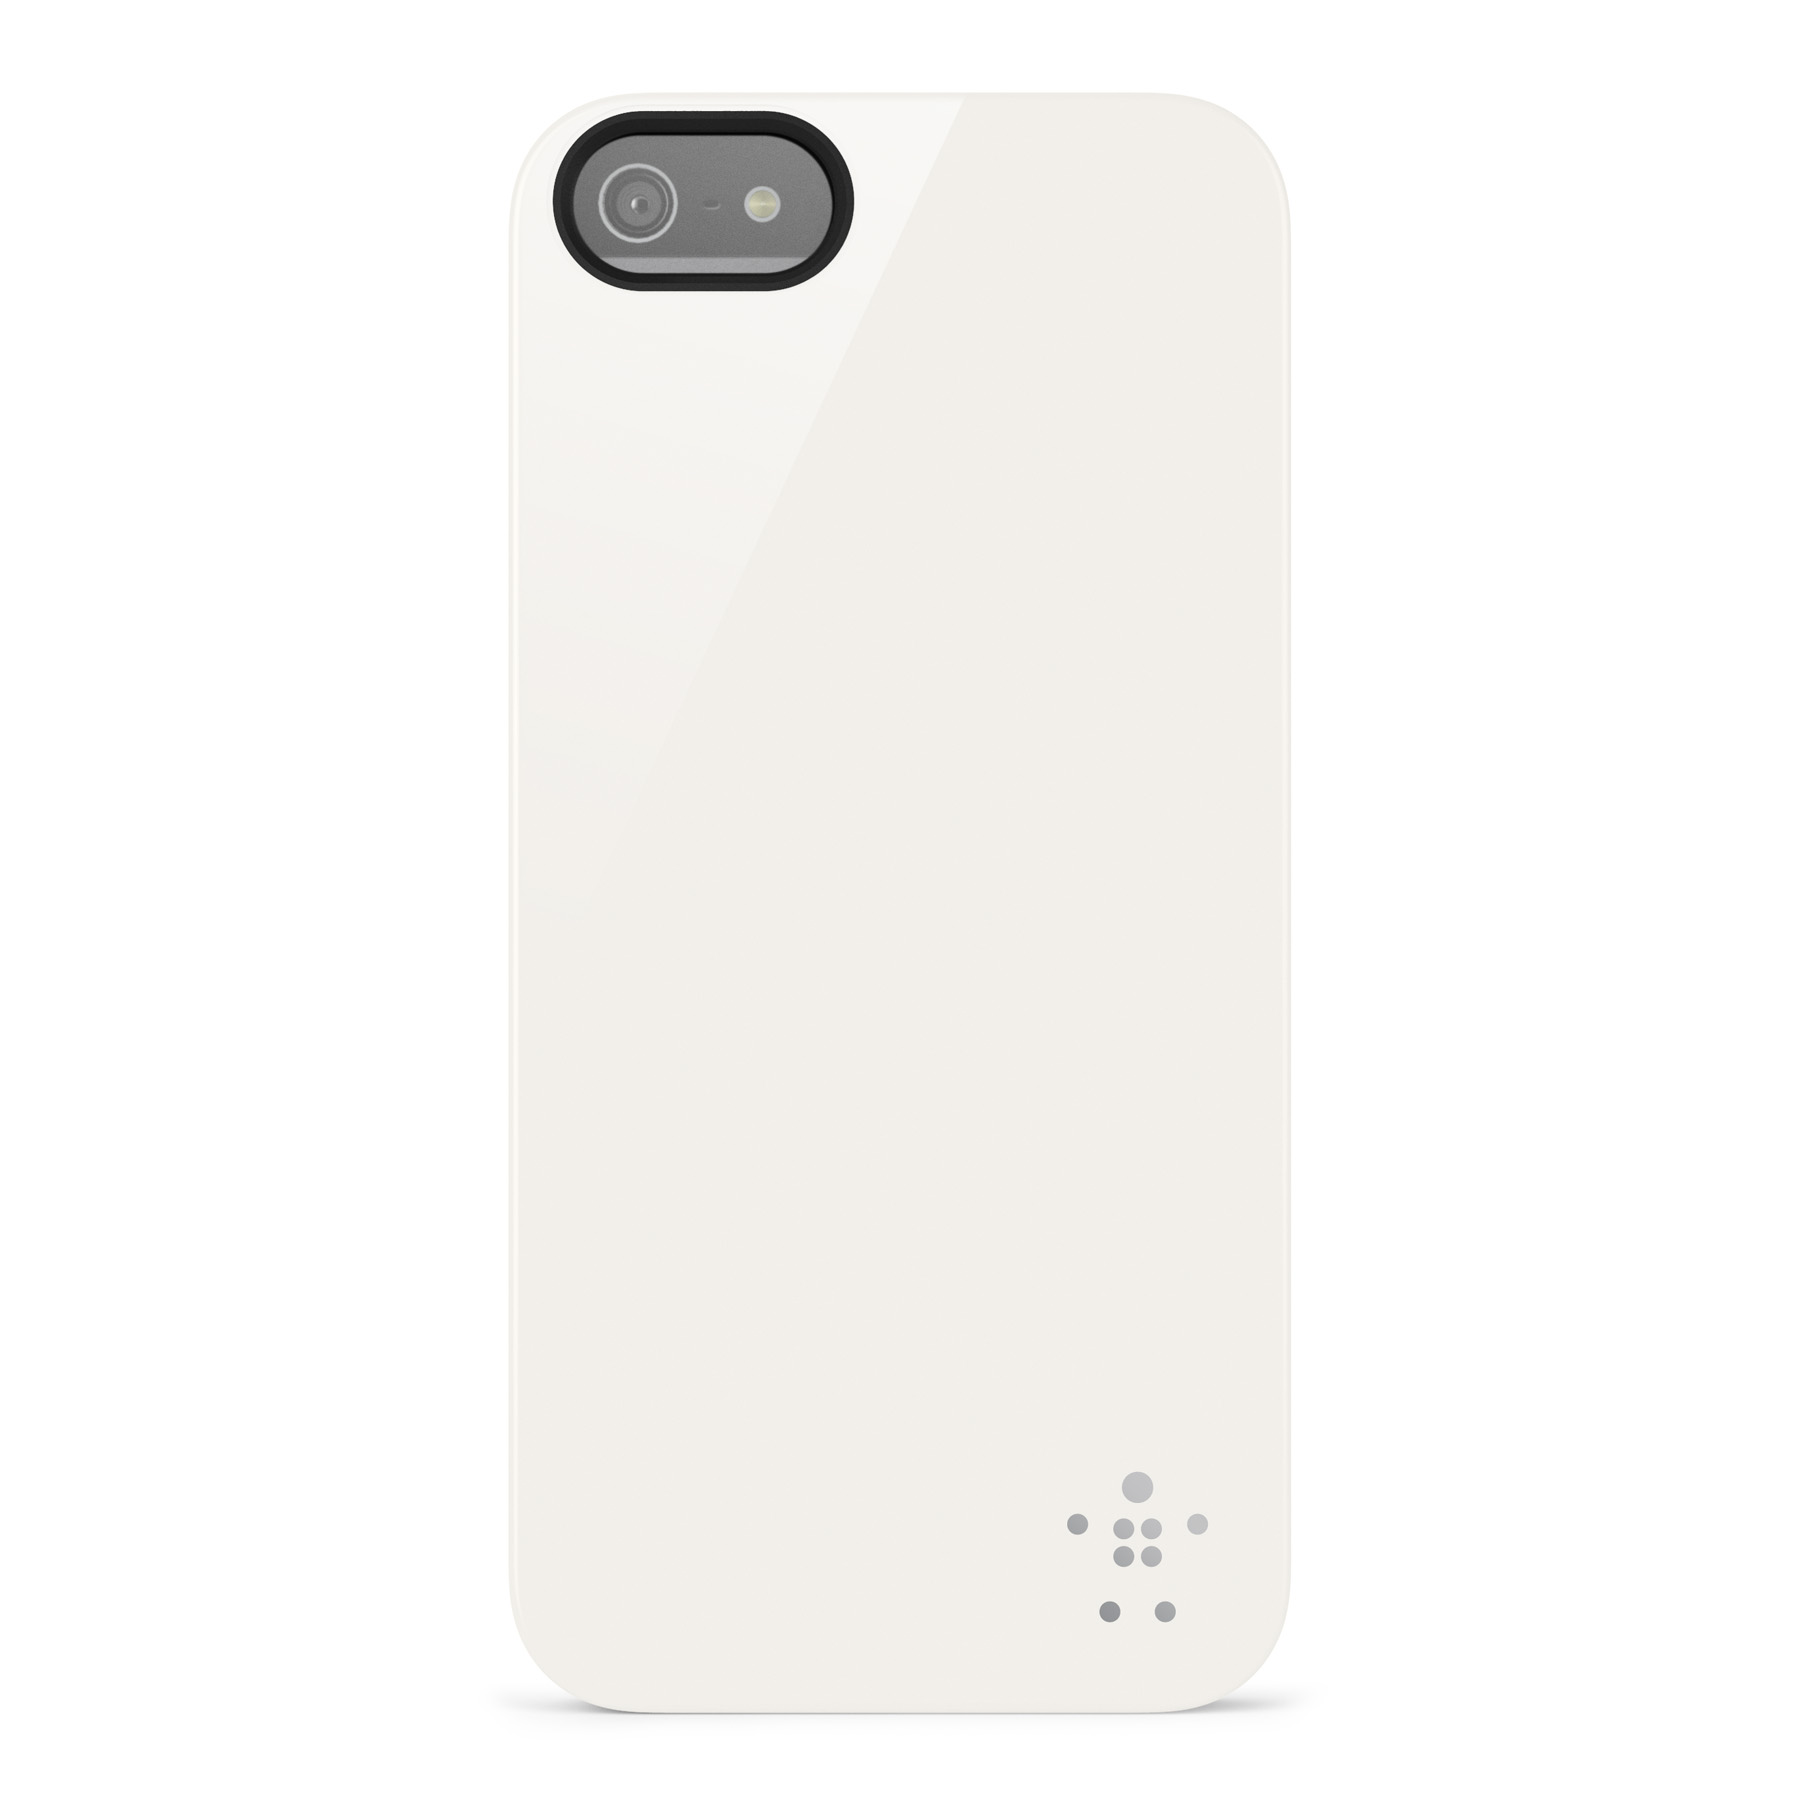  Capac de protectie Belkin Acryl F8W159VFC01 pentru iPhone 5/5S/SE, Alb 